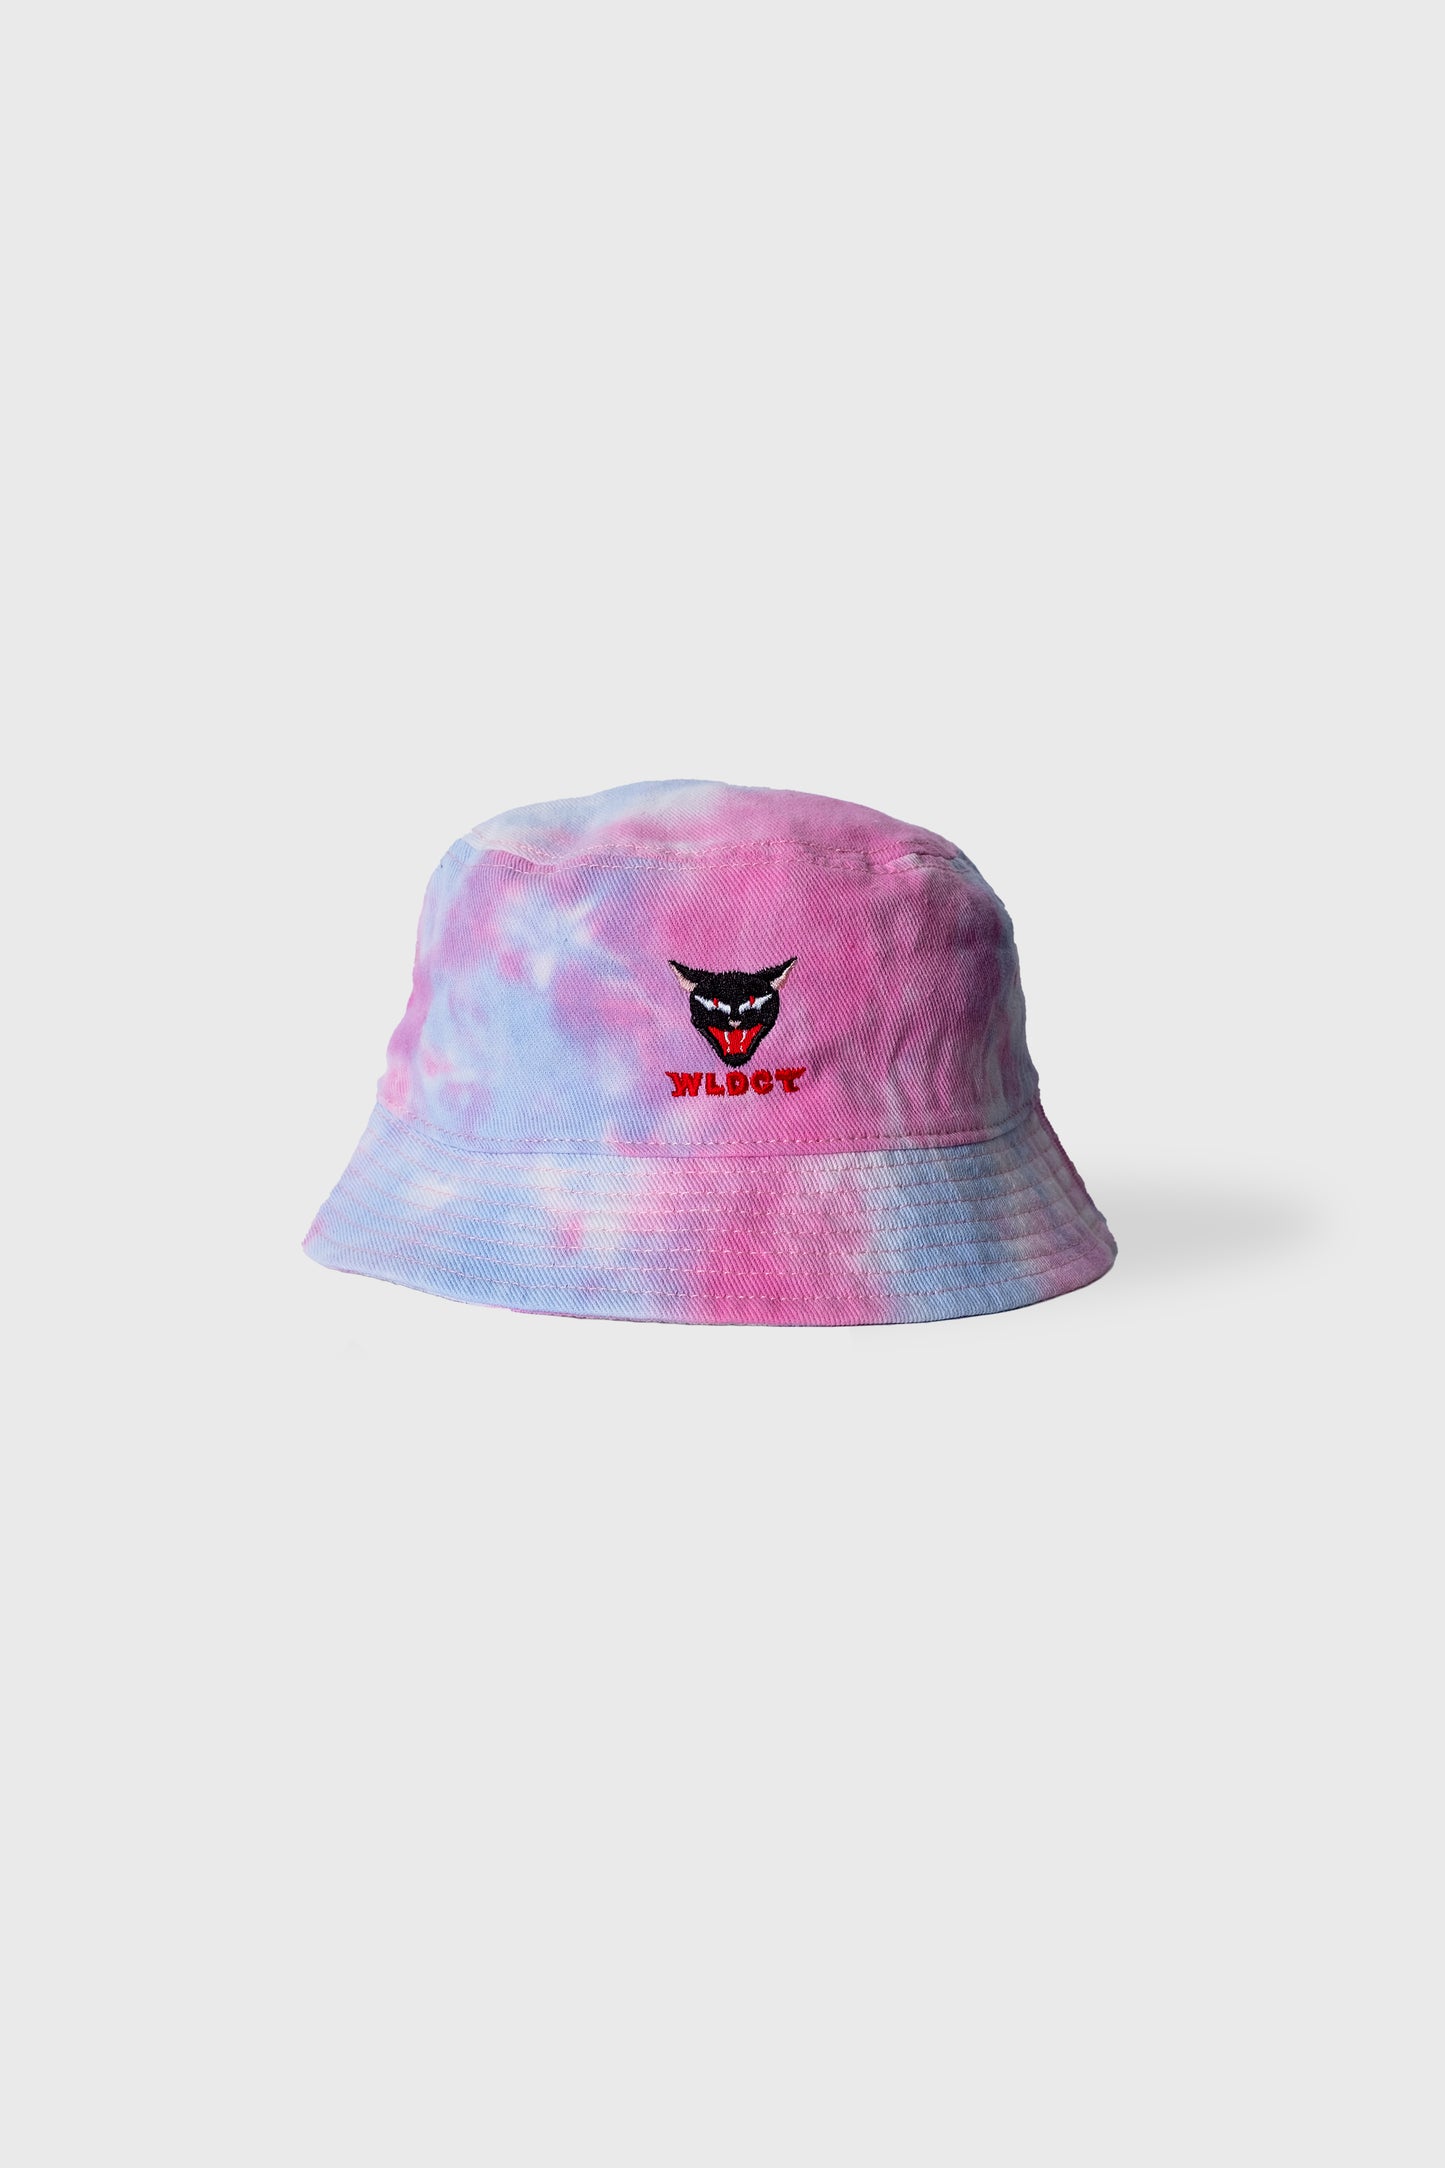 WLDCT 'Cotton Candy' Tie Dye Bucket Hat